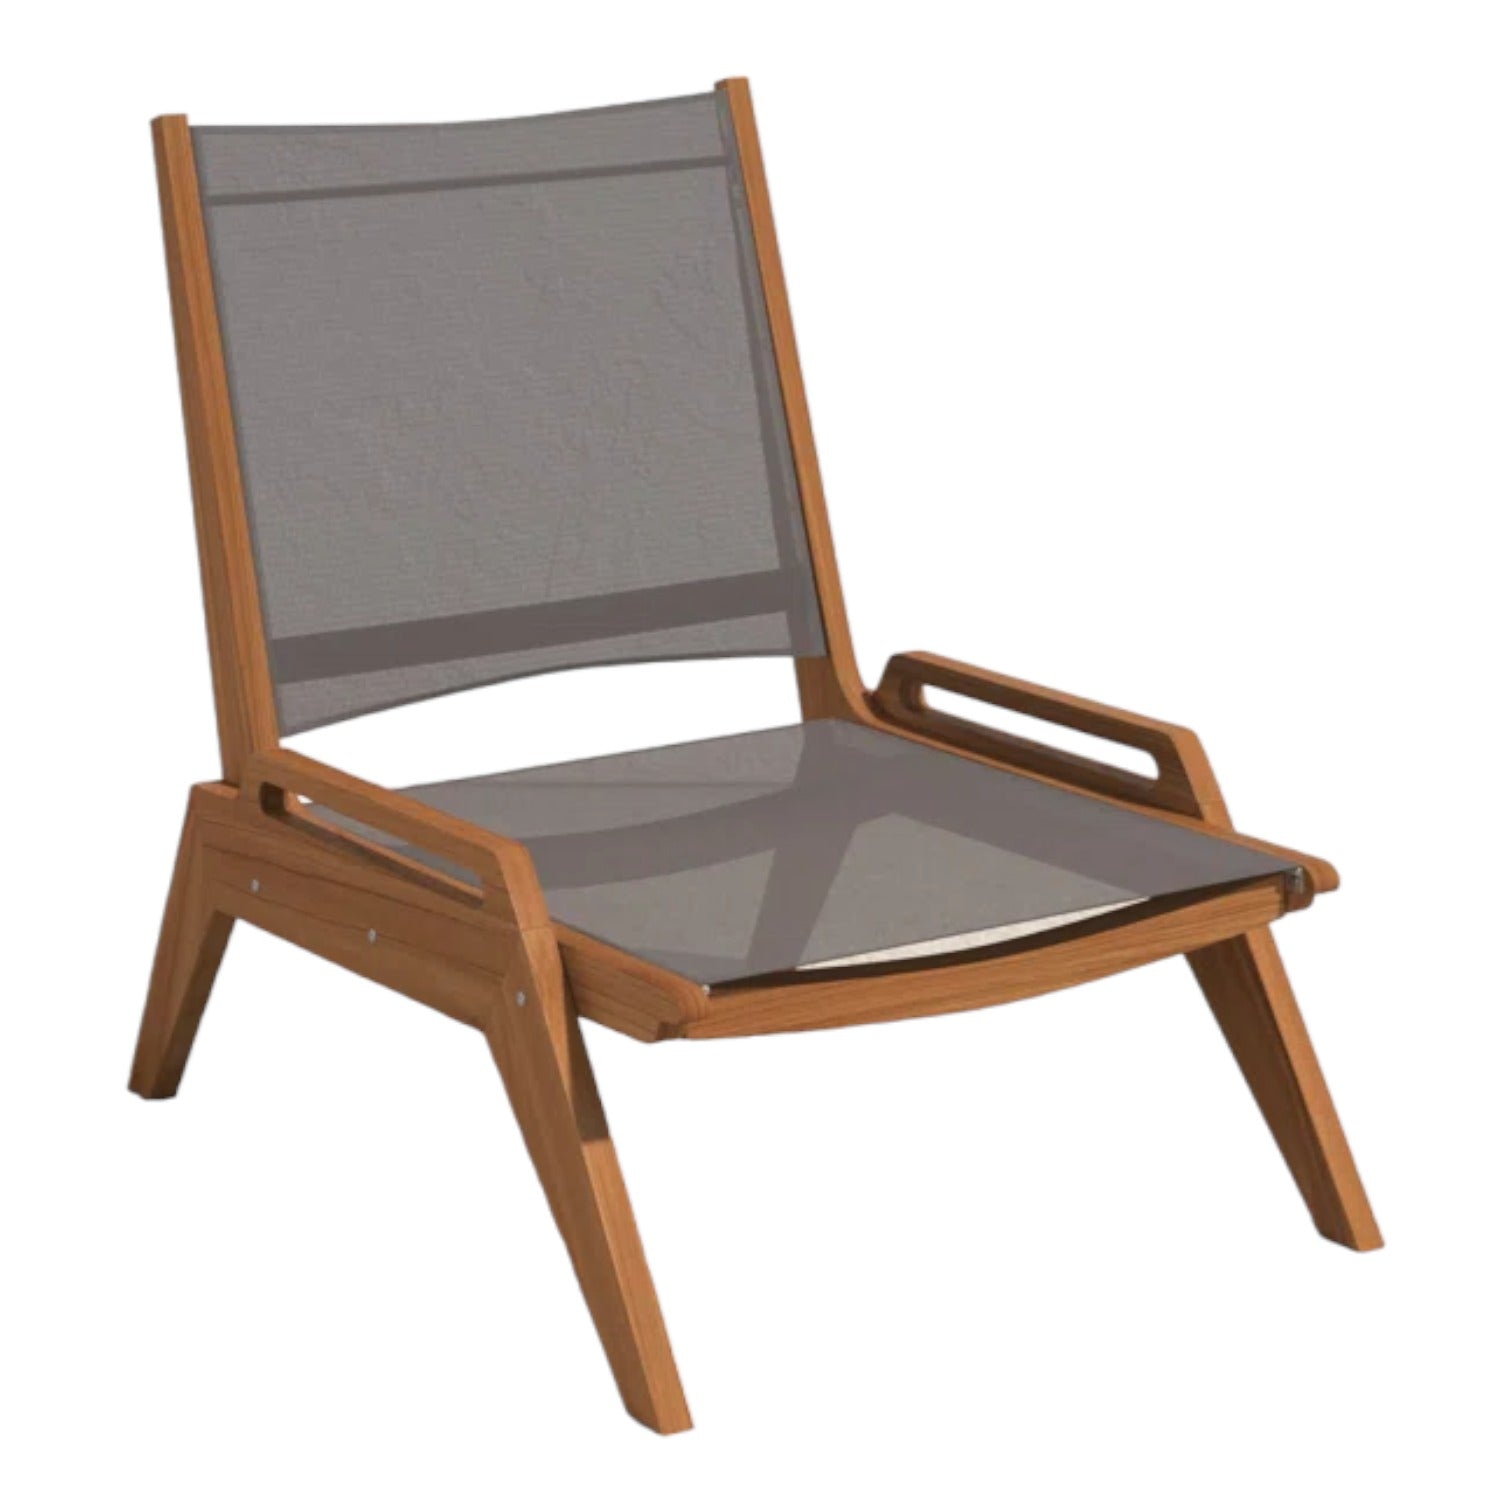 Draper Teak Outdoor Sling Chat Chair-Outdoor Accent Chairs-HiTeak-LOOMLAN